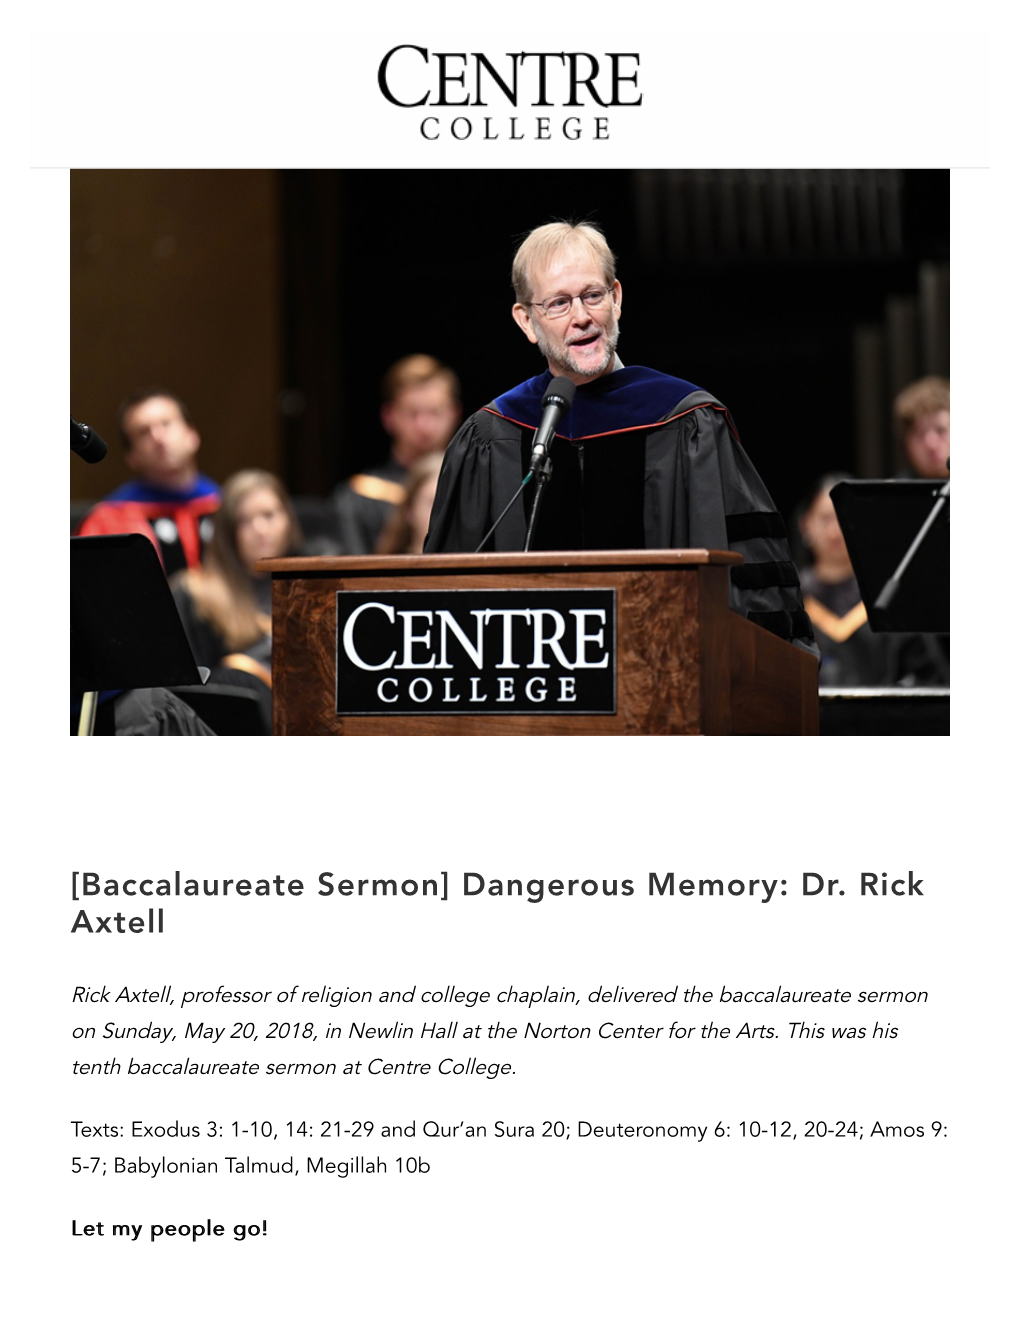 Dangerous Memory: Dr. Rick Axtell